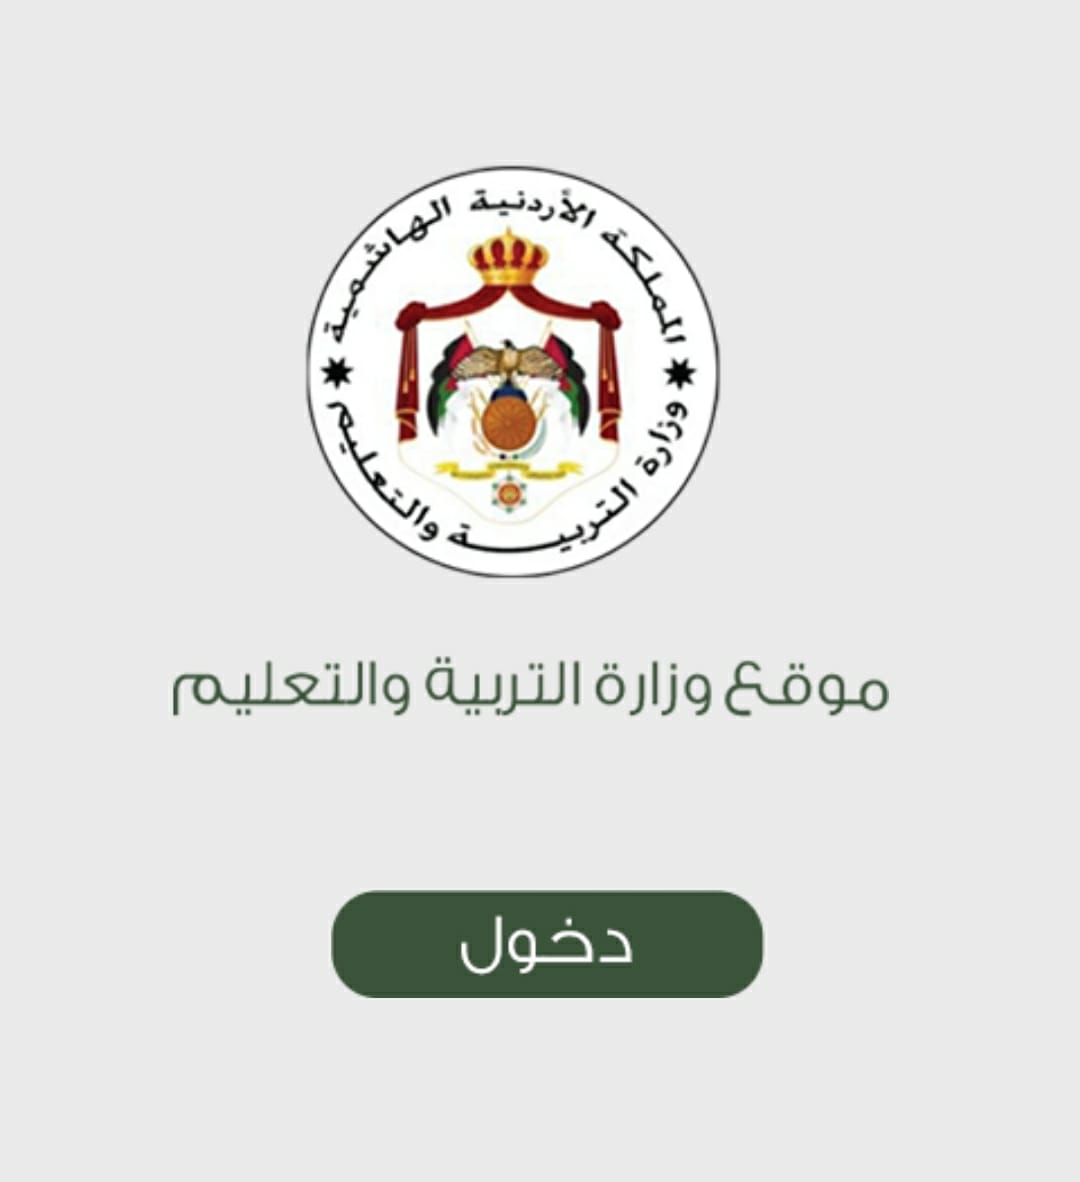 “Jordan results” حسب الاسم نتائج التوجيهي 2022 الاردن tawjihi.jo الثانوية العامة الاردنية